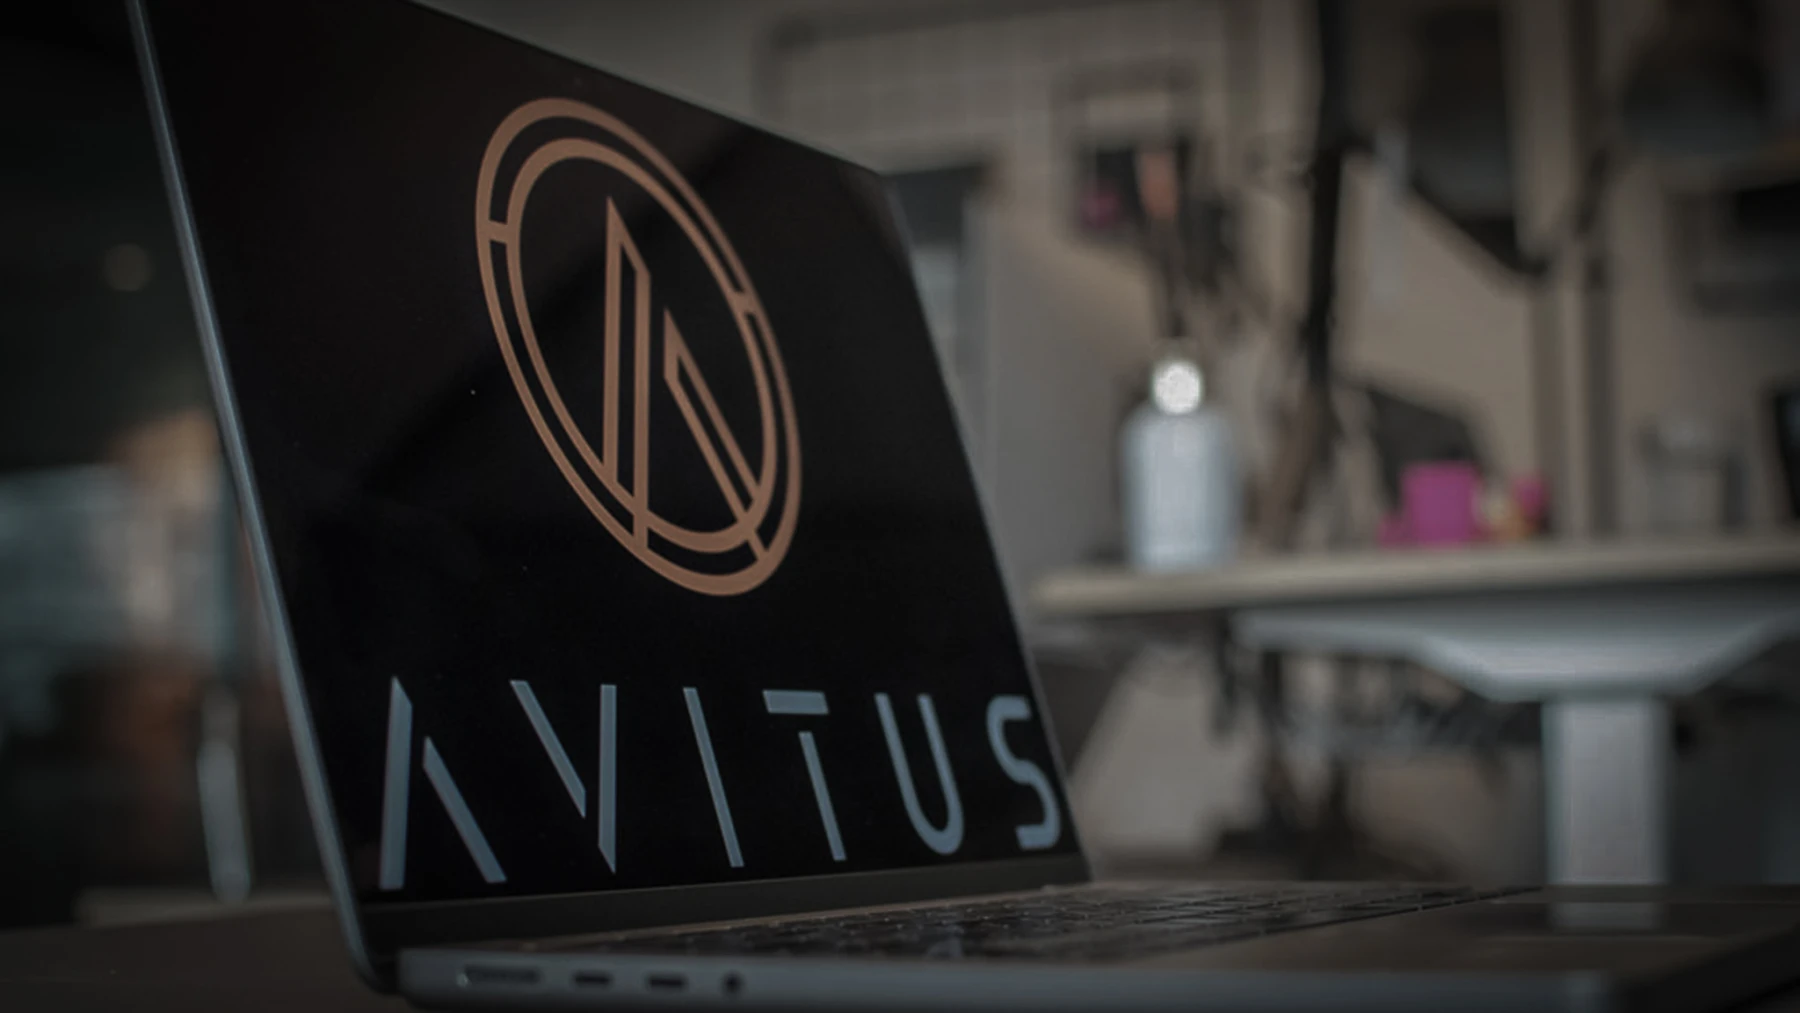 en dator med Avitus ITs logga på sig.